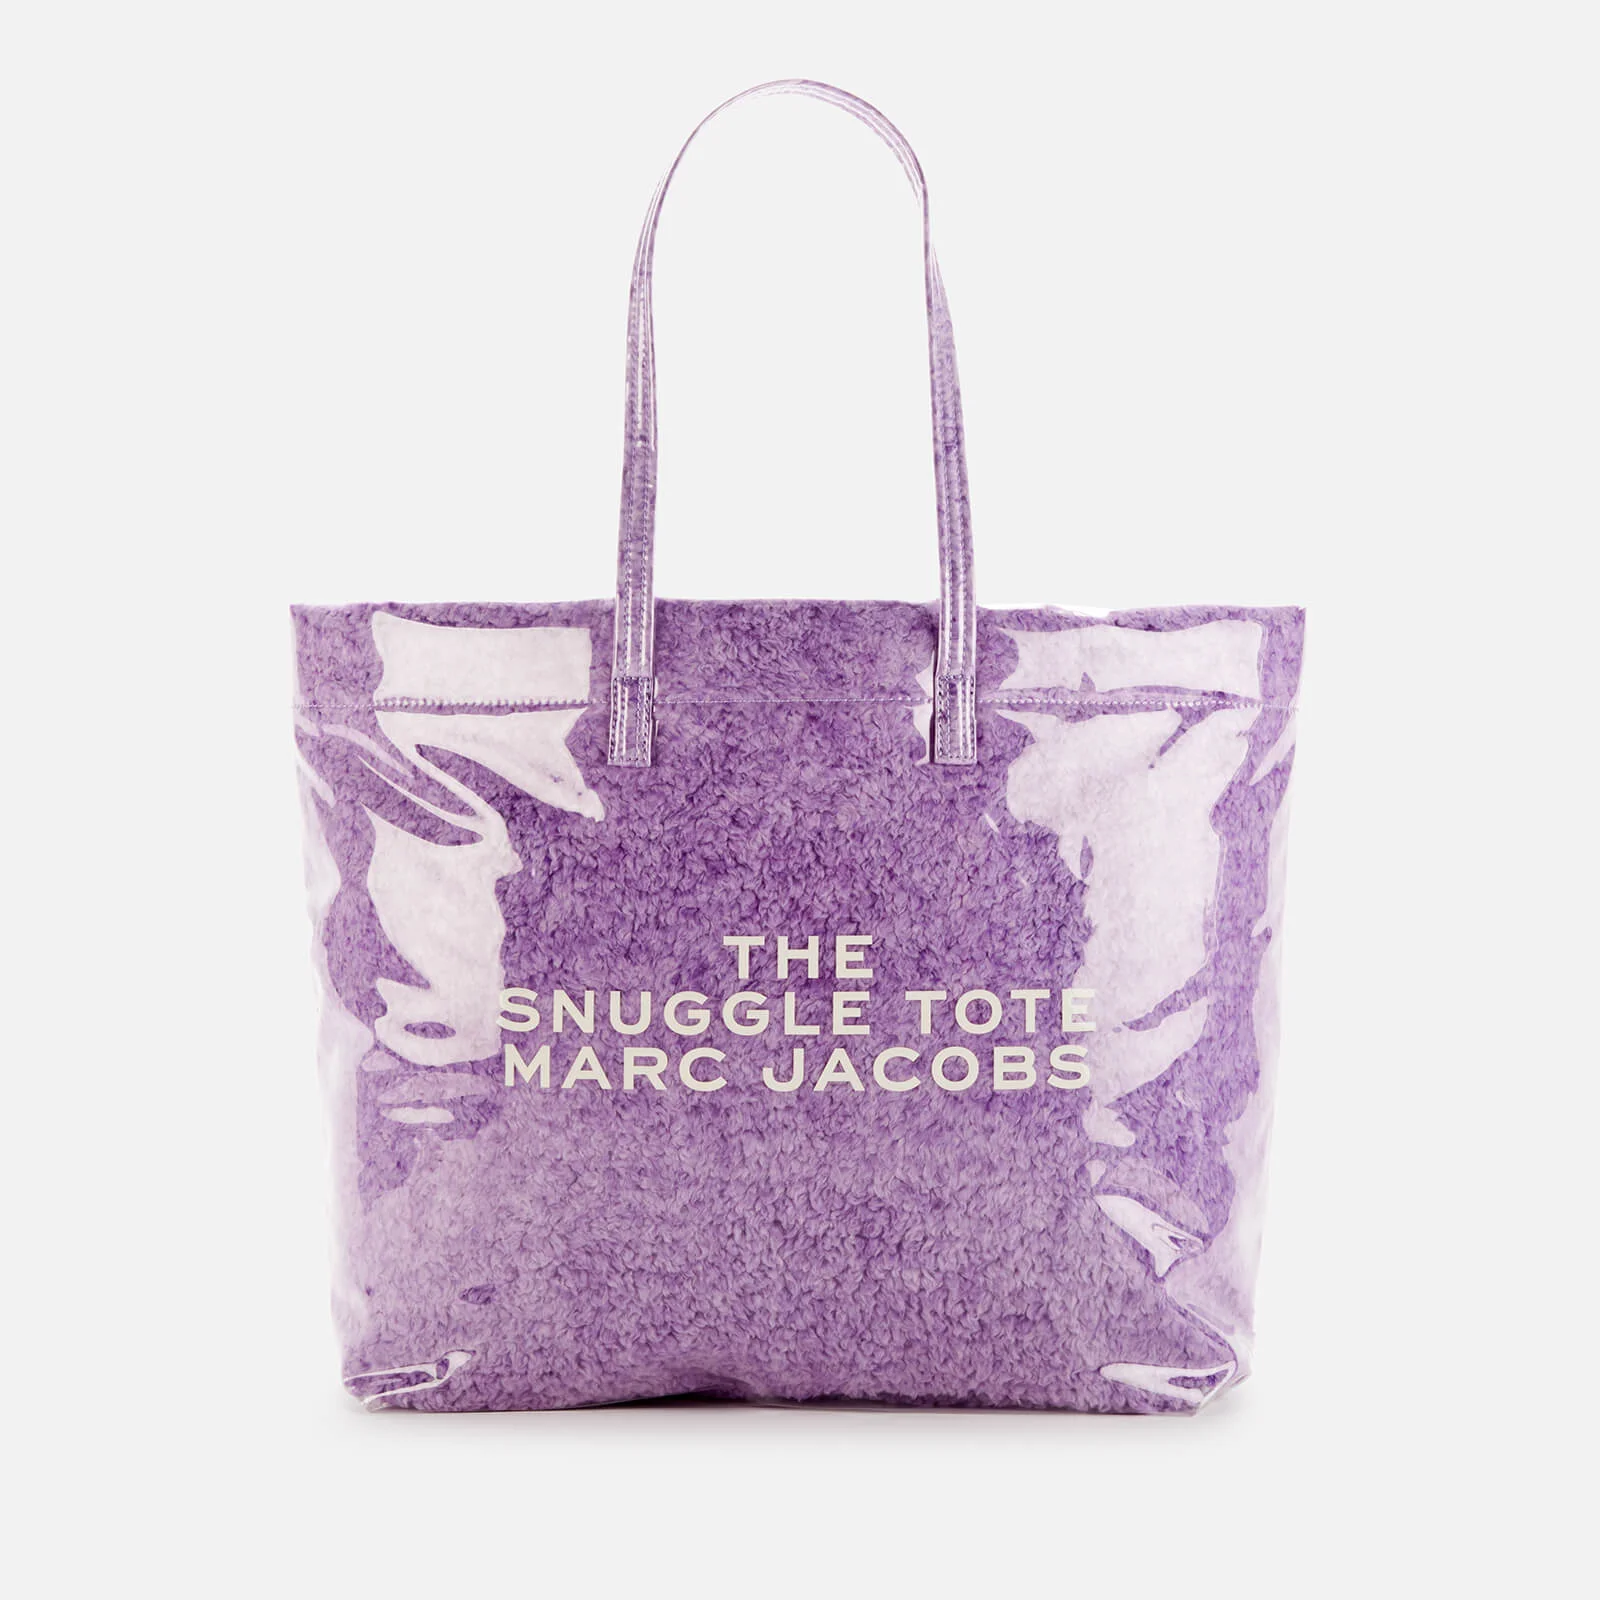 Marc Jacobs Women's The Snuggle Tote Bag - Purple Image 1